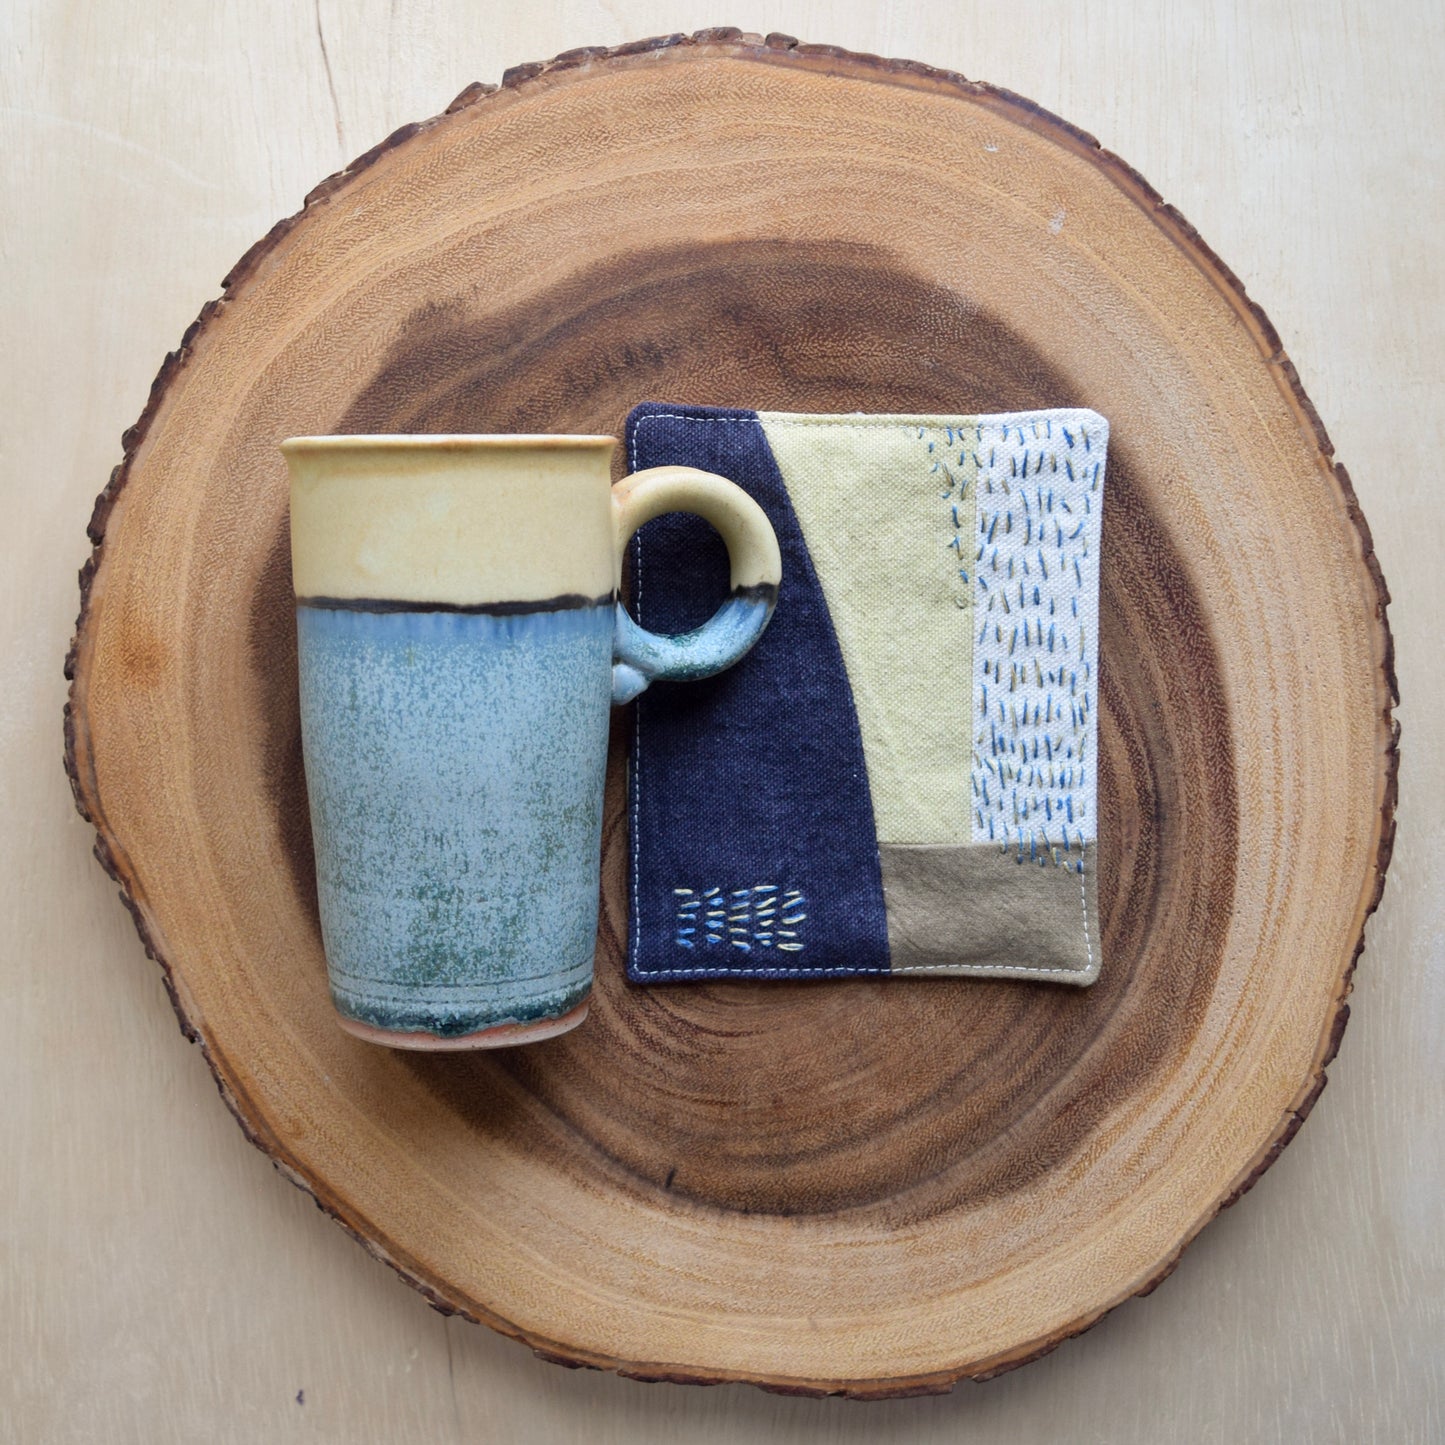 Ceramic Mug & Natural dyed Mat - Spring Rain